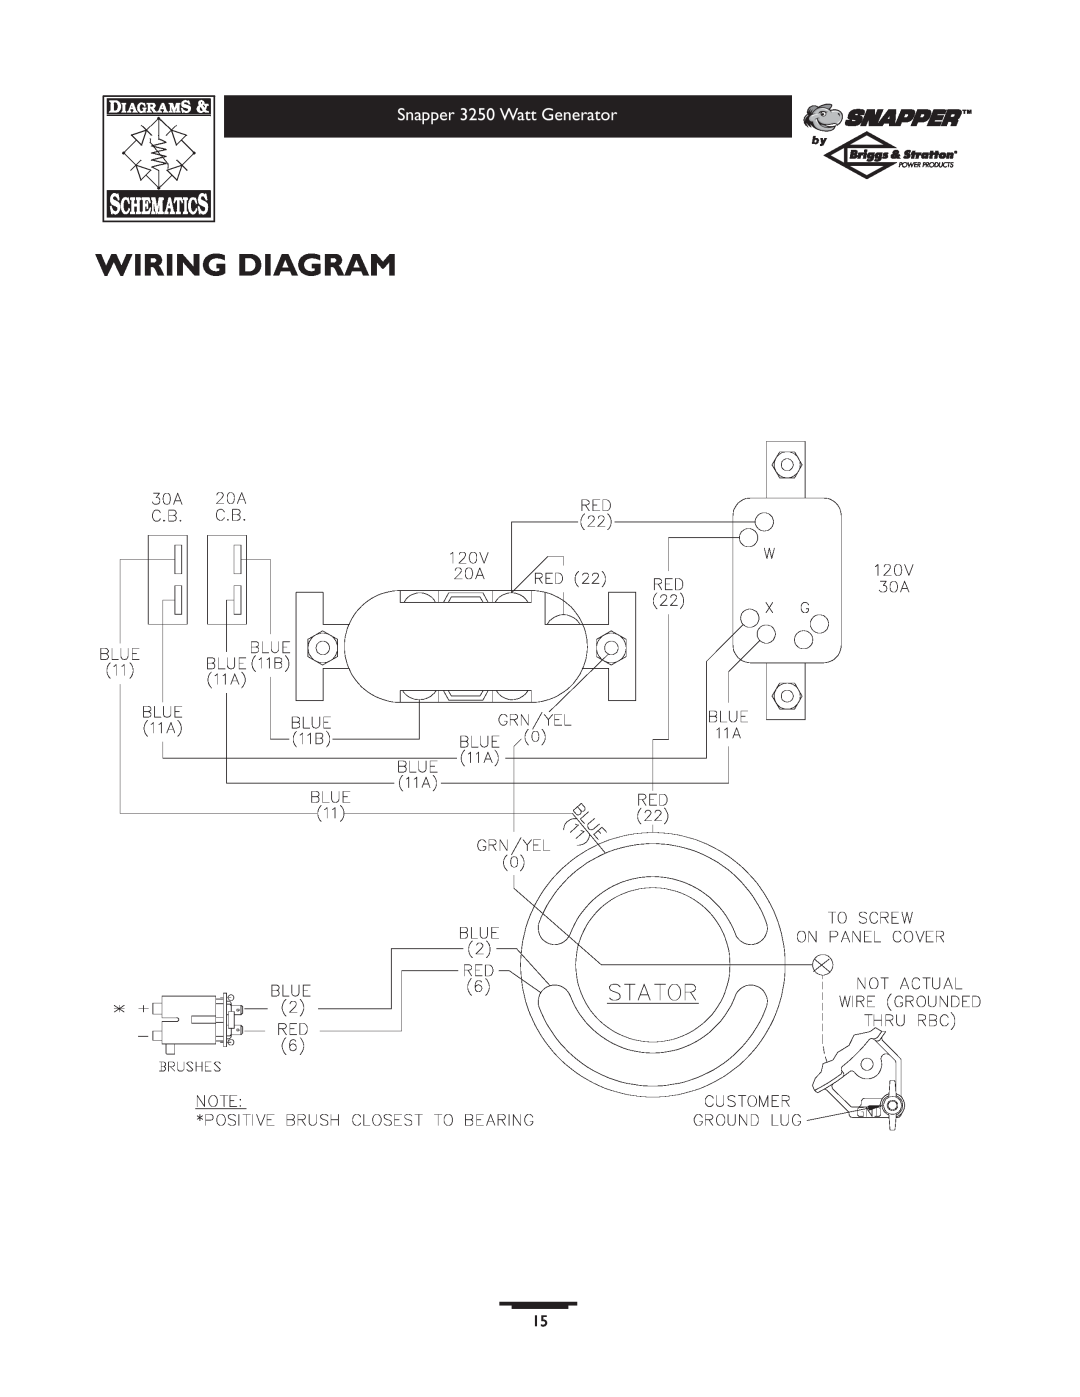 Snapper 1667-0 owner manual Wiring Diagram, Snapper 3250 Watt Generator 